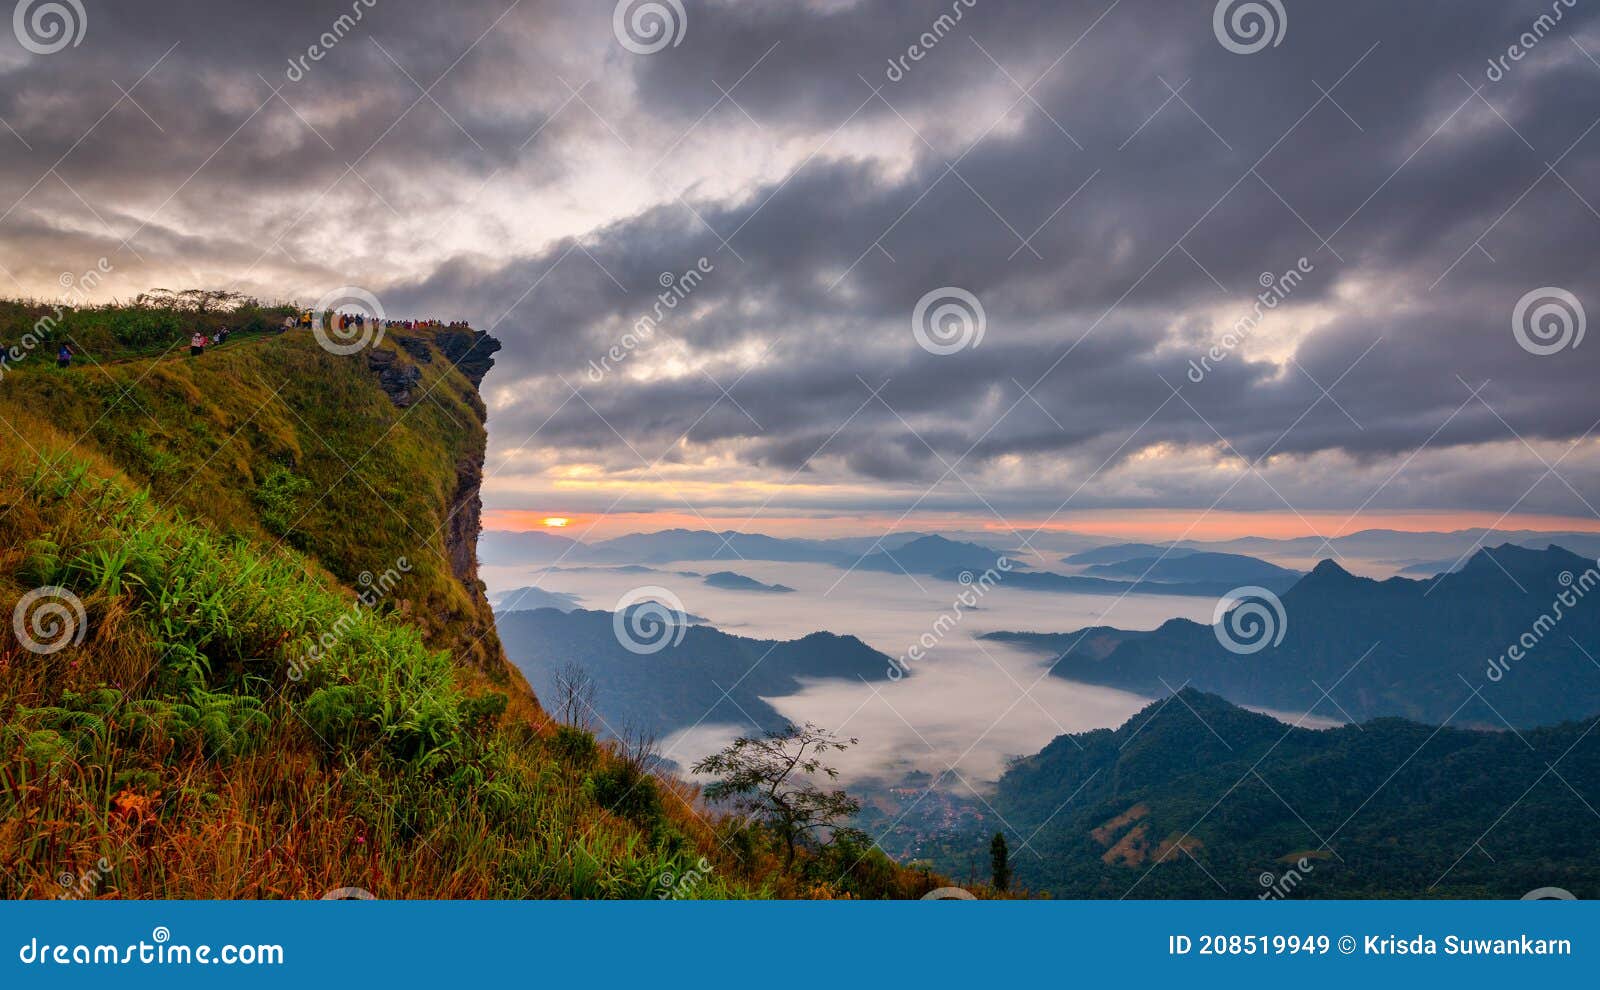 phu chifa mountain with fog and cloudy sky